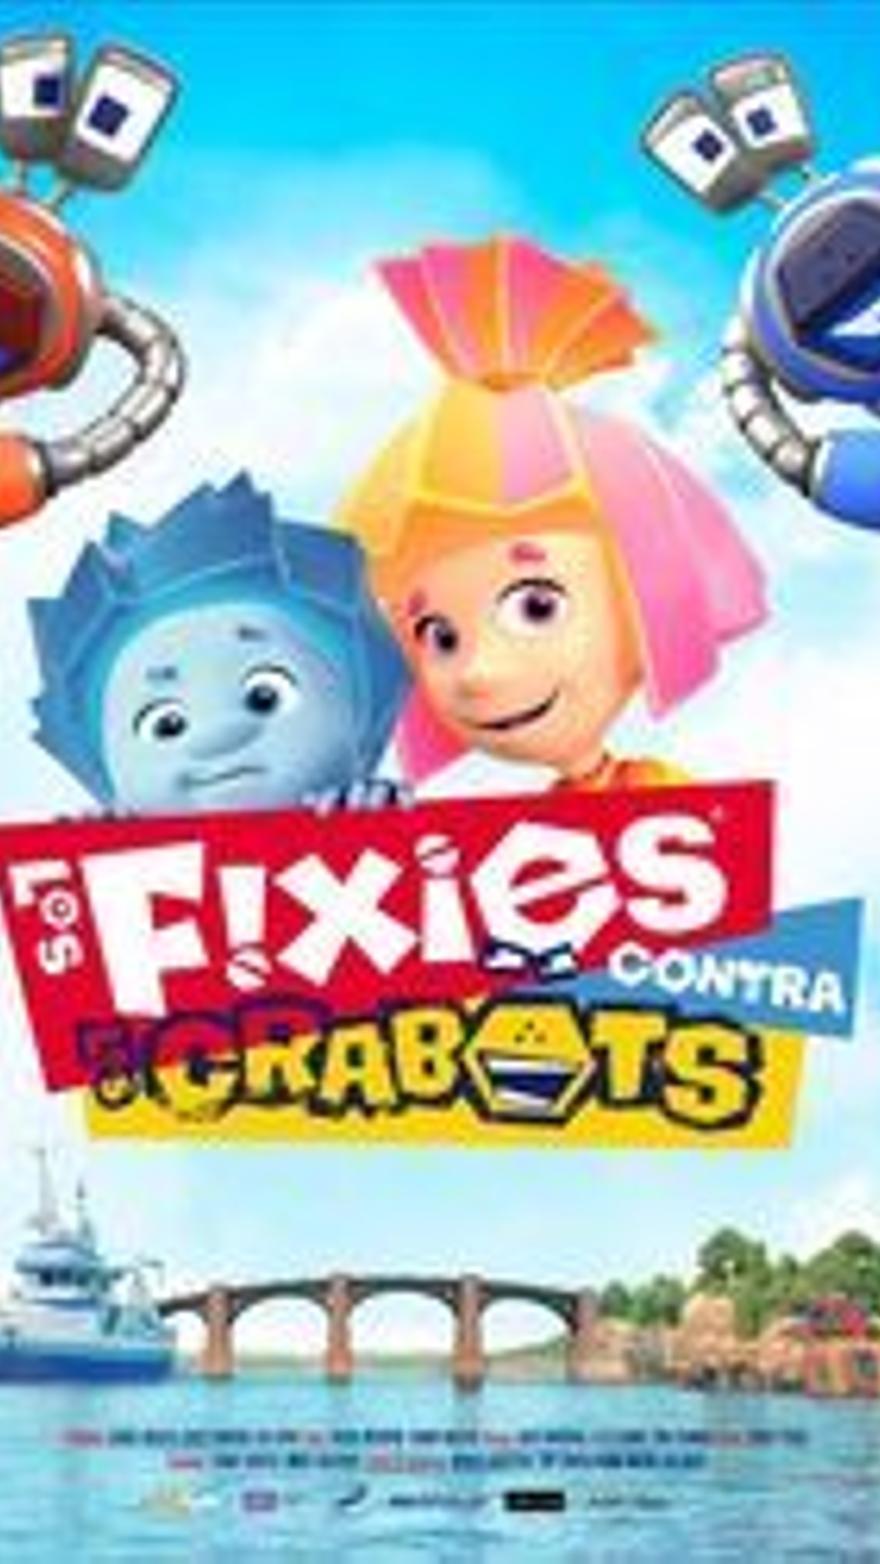 Los Fixies contra los Crabots